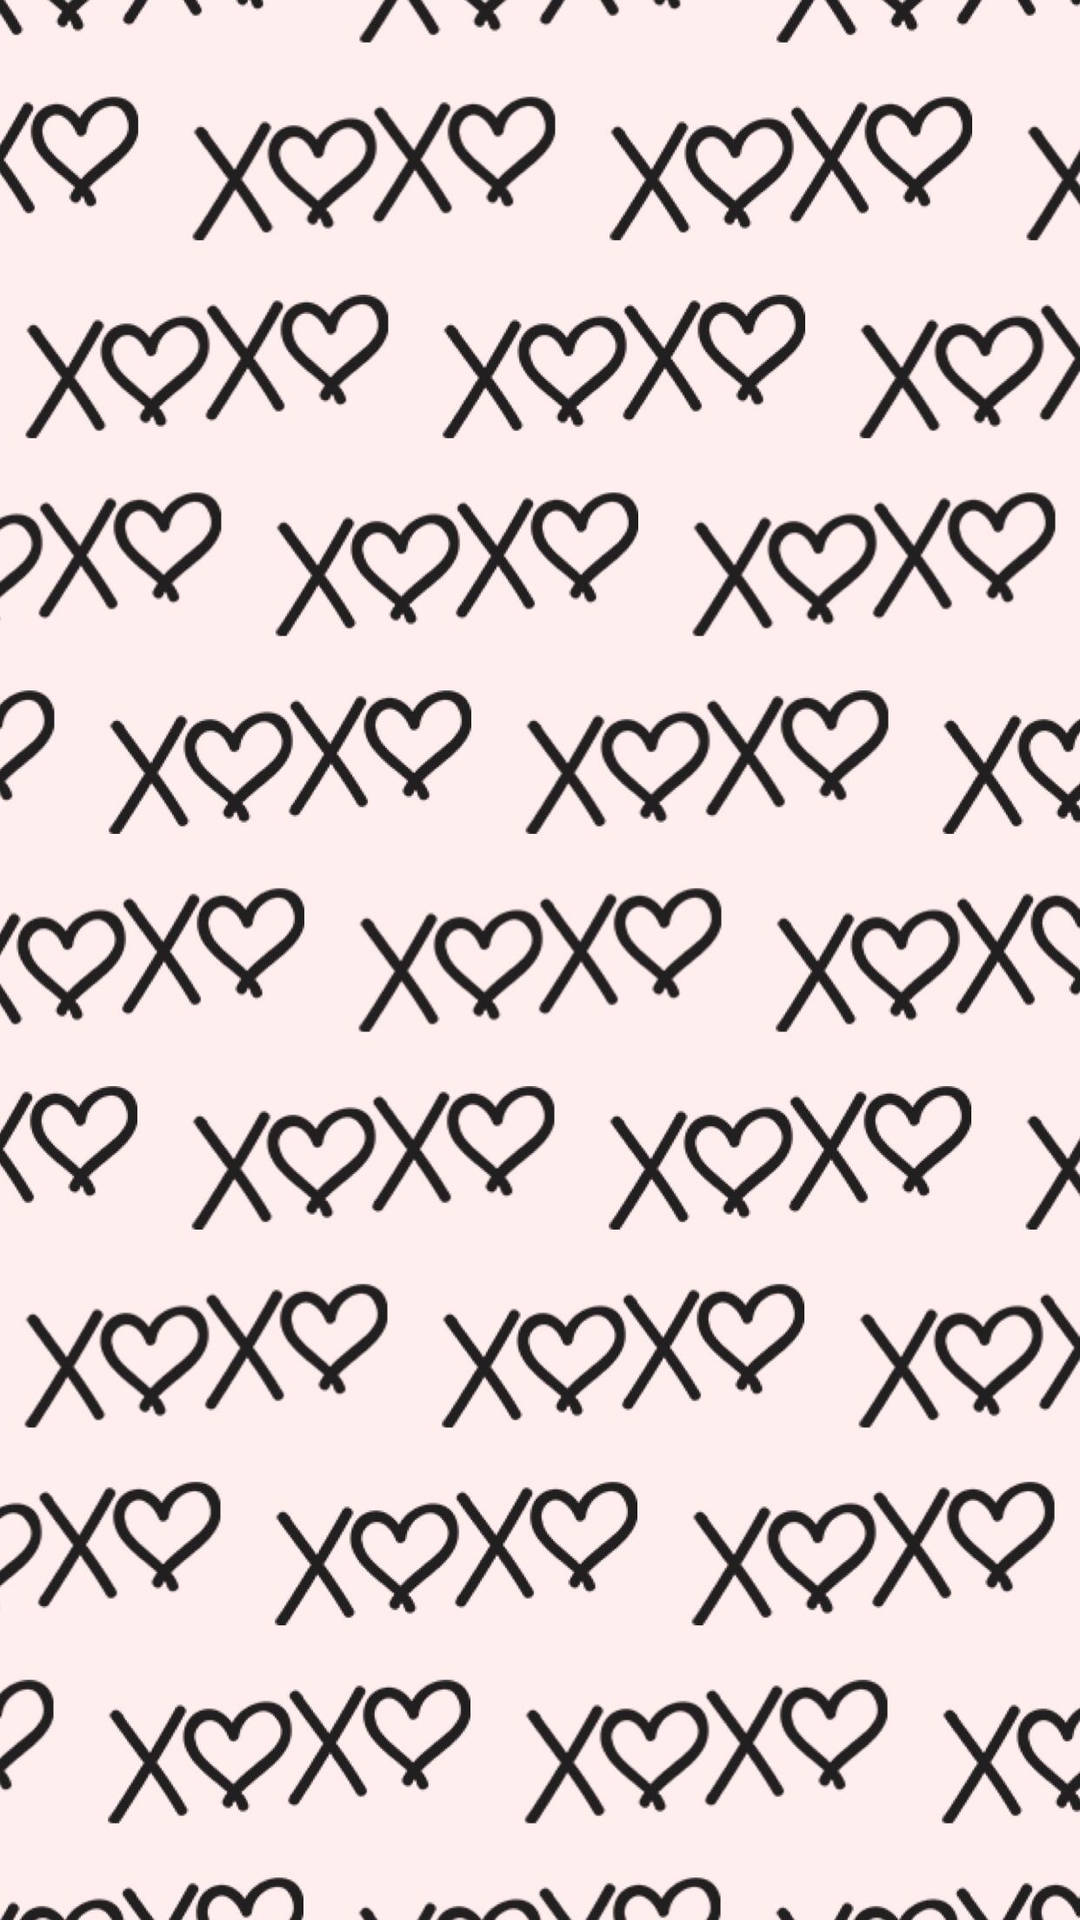 Xoxo Hearts Cute Iphone Lock Screen Background